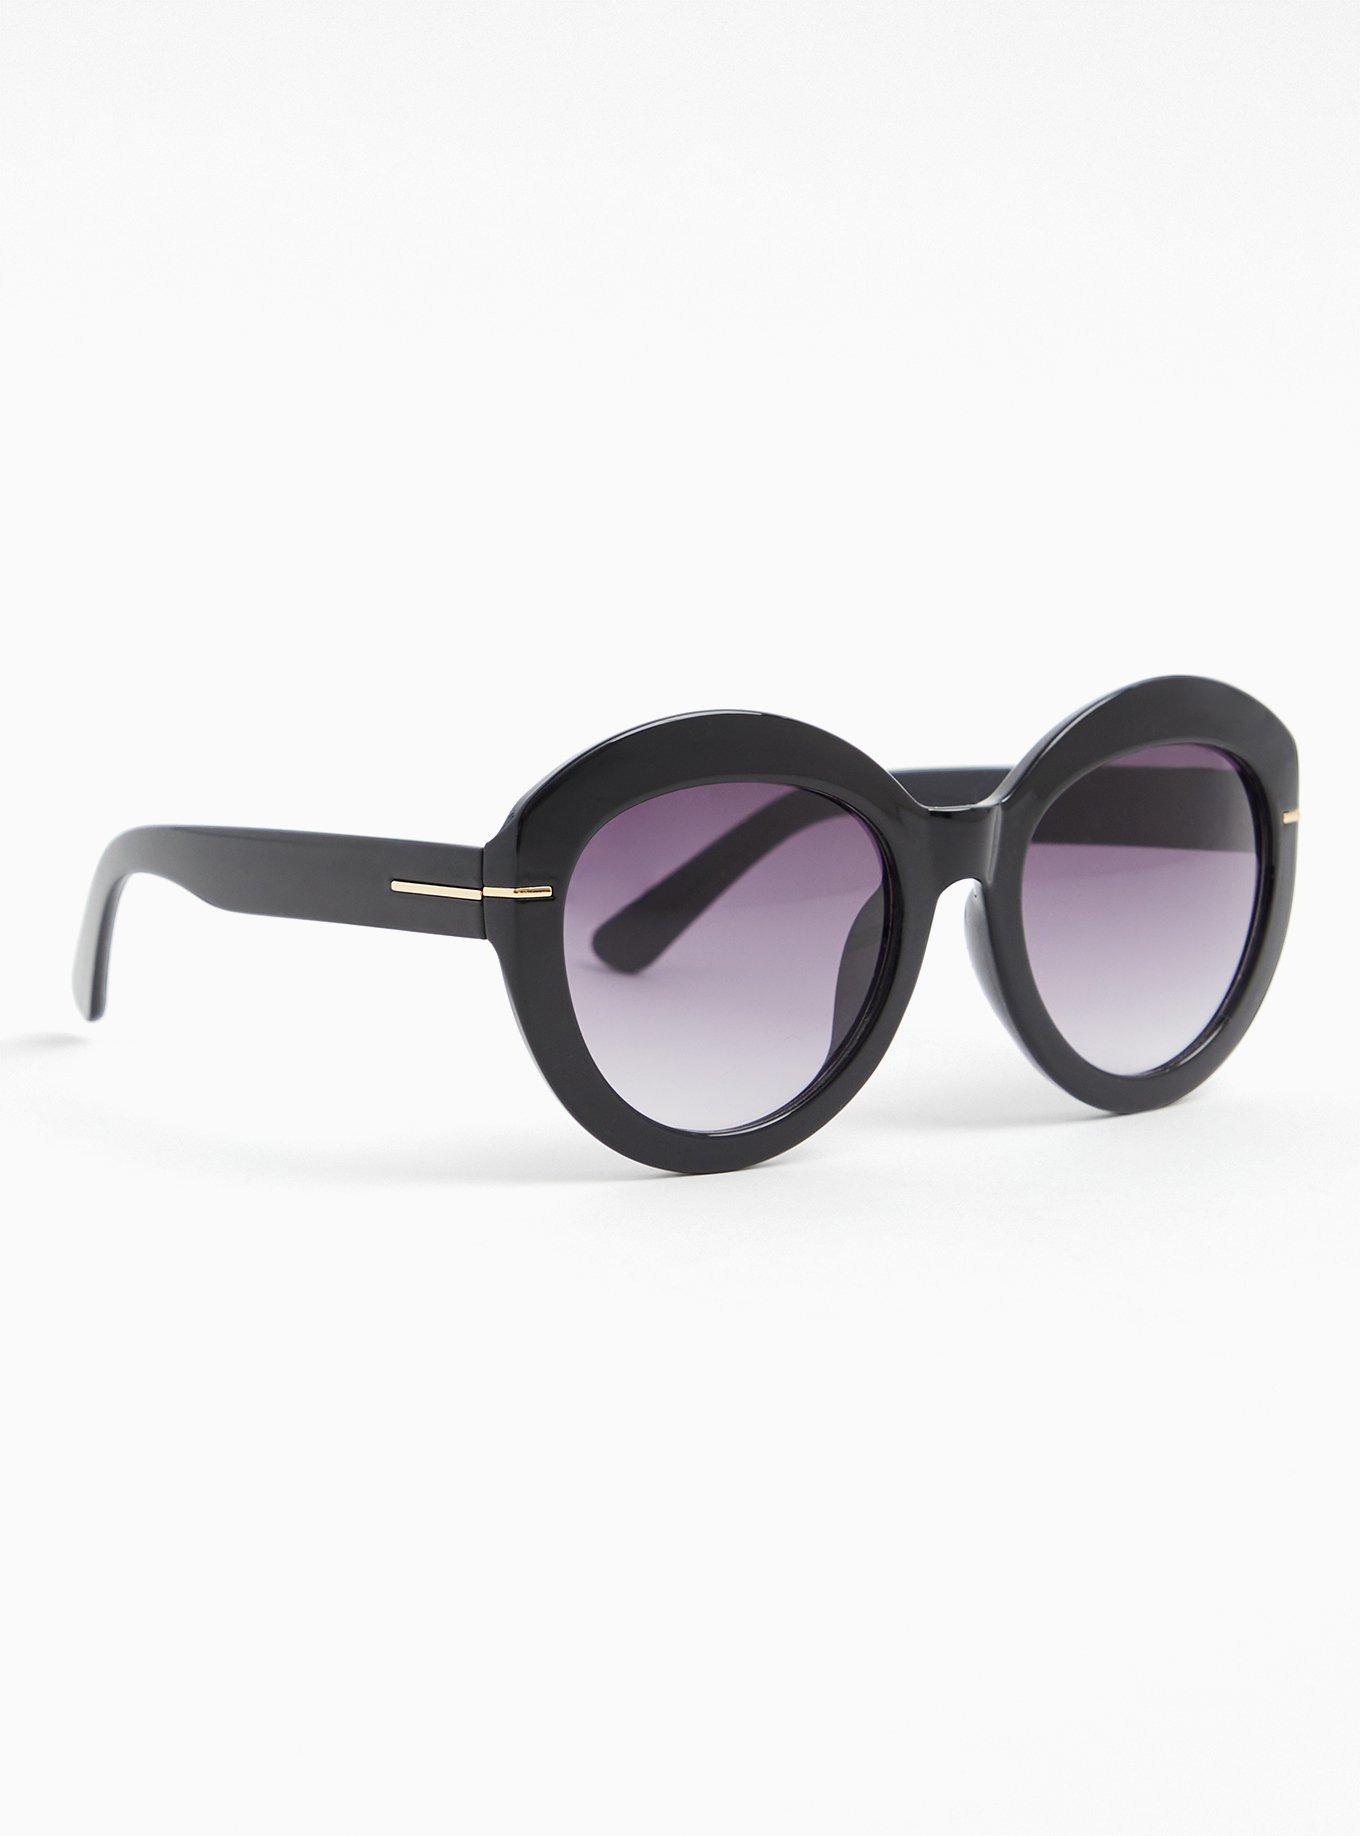 Plus Size - Black Oversized Oval Sunglasses - Torrid